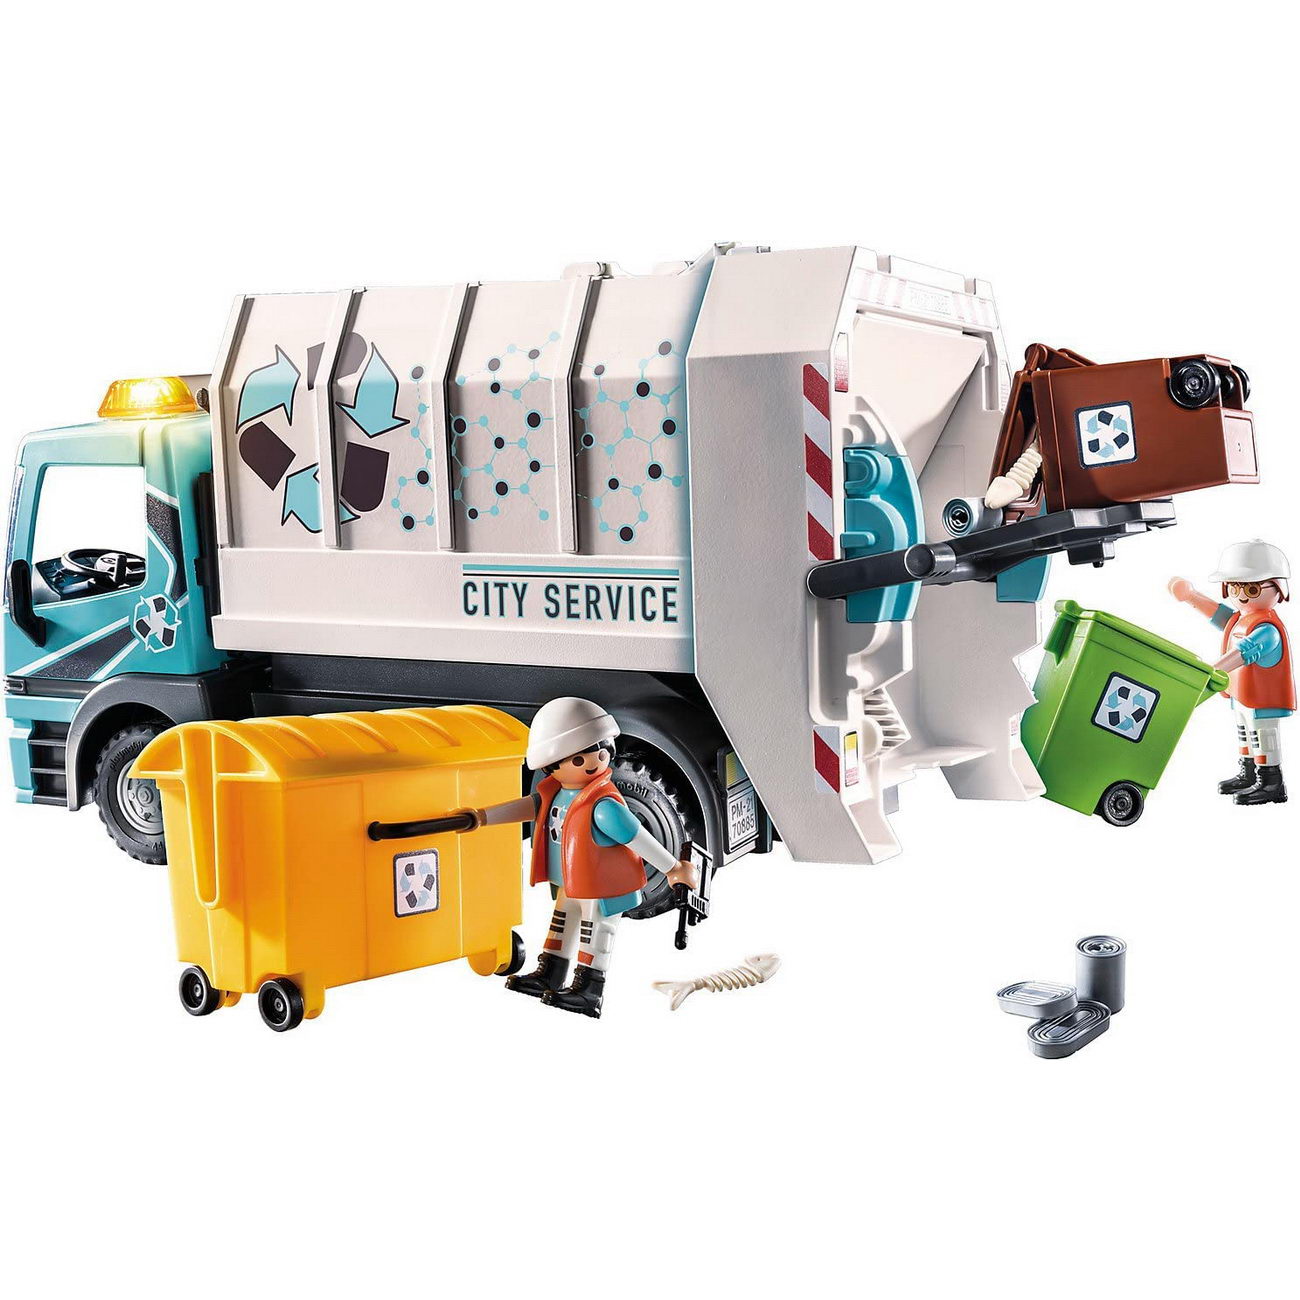 Playmobil 70885 - Müllfahrzeug mit Blinklicht - City Life